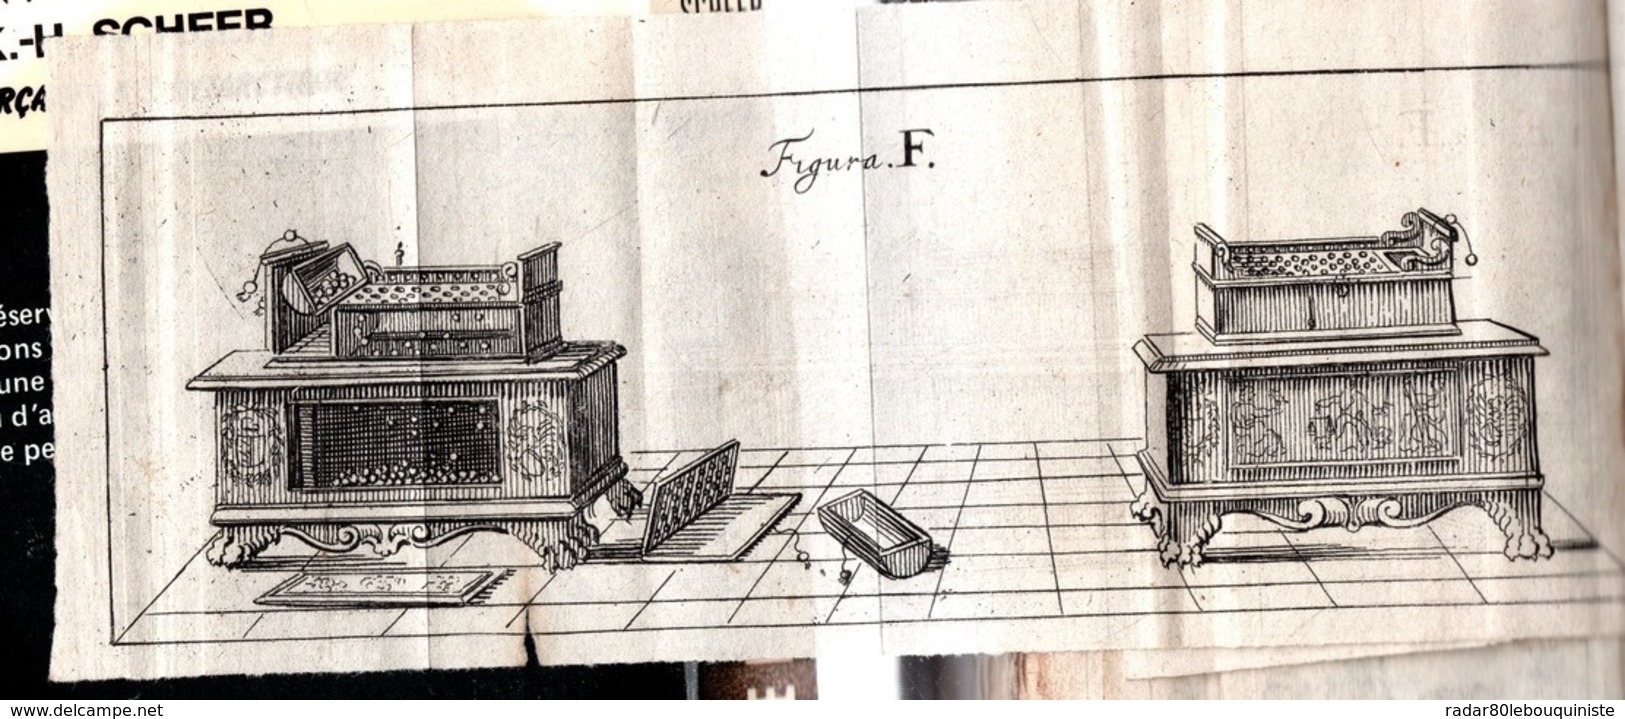 DONATO GIANNOTTI.FLORENTIN.dialogi de republica venetorum.467 pages.ELZEV.1631.